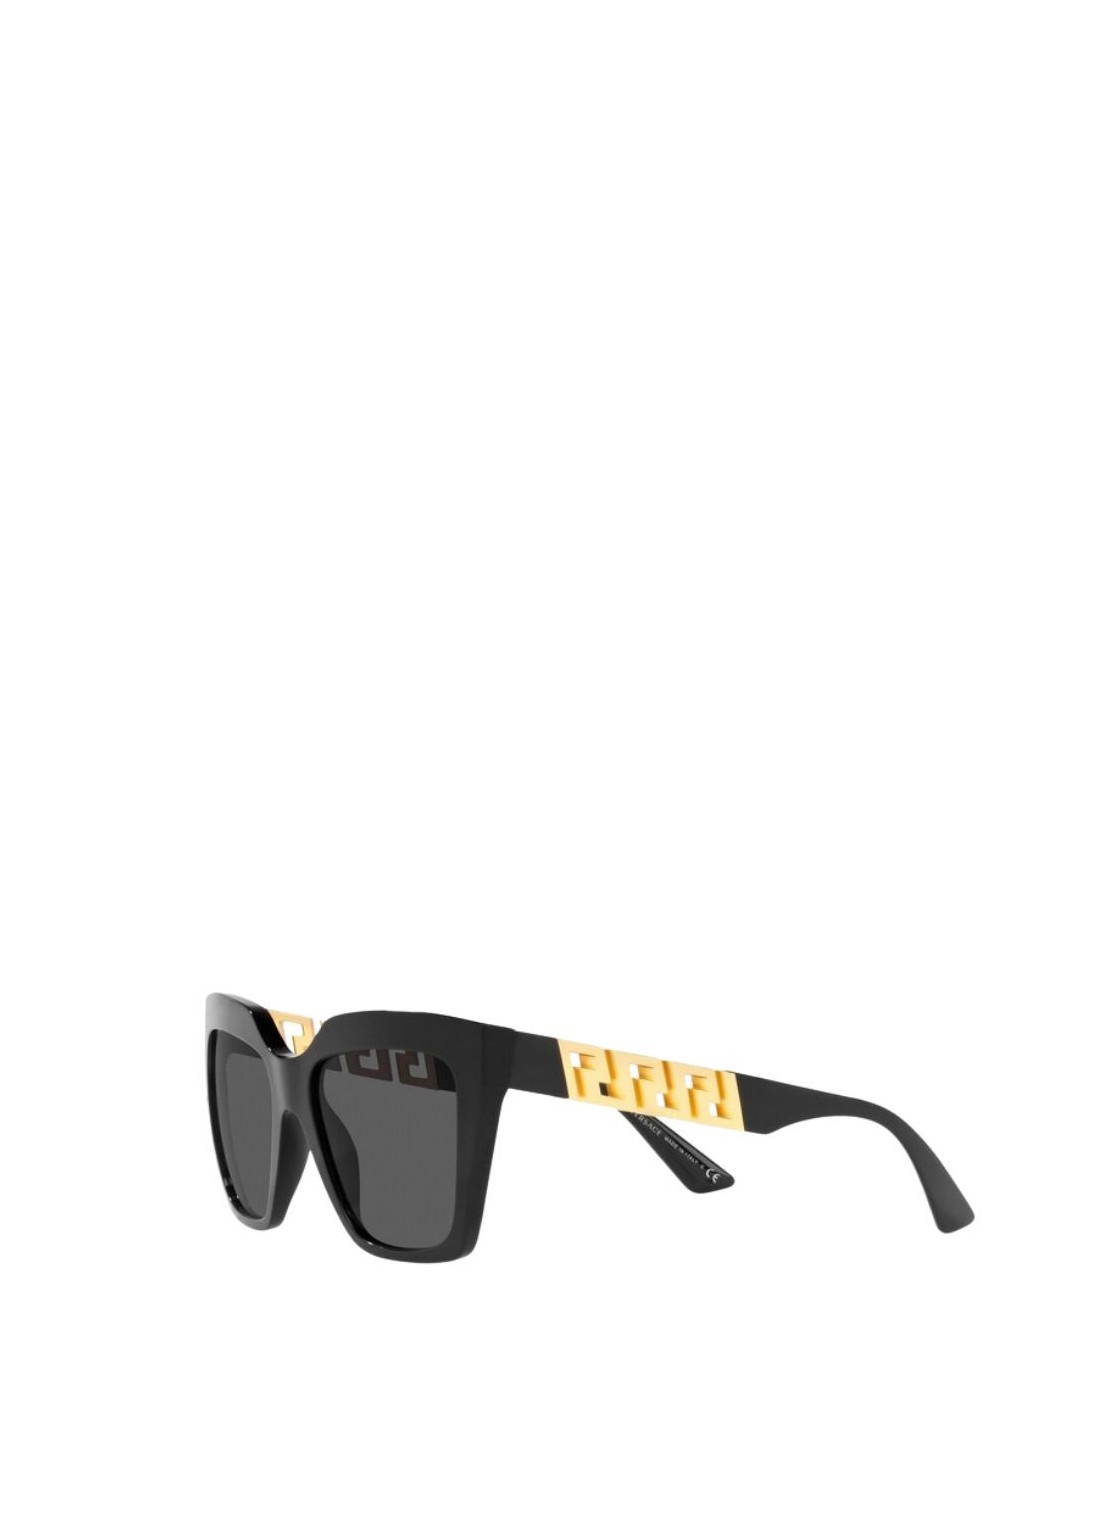 Gafas versace sunglasses woman 0ve4418 0ve4418 gb1 87 talla 56
 